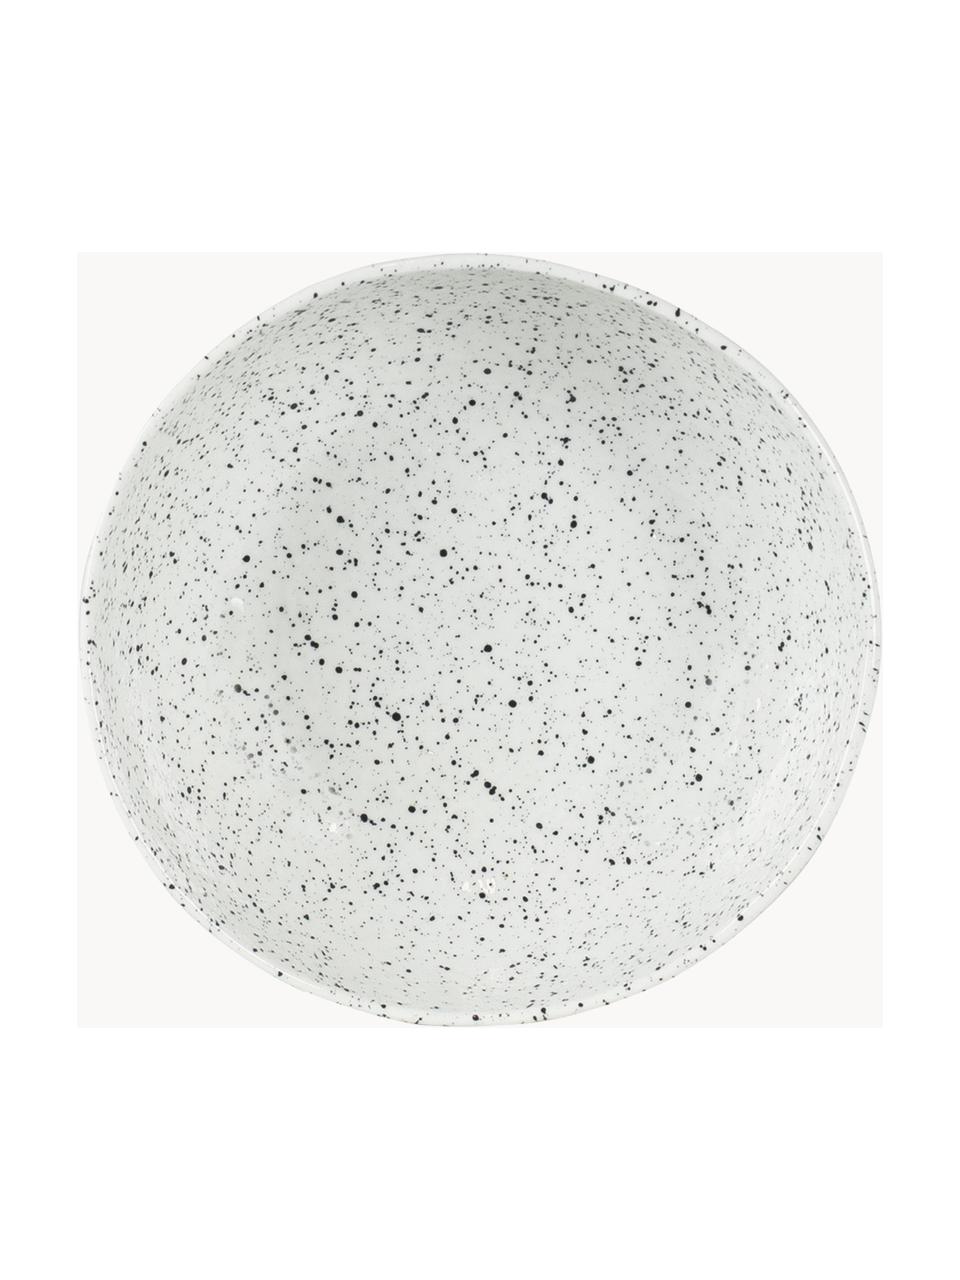 Porzellan-Suppenteller Poppi, 2 Stück, Porzellan, Weiß, schwarz gesprenkelt, Ø 20 x H 8 cm